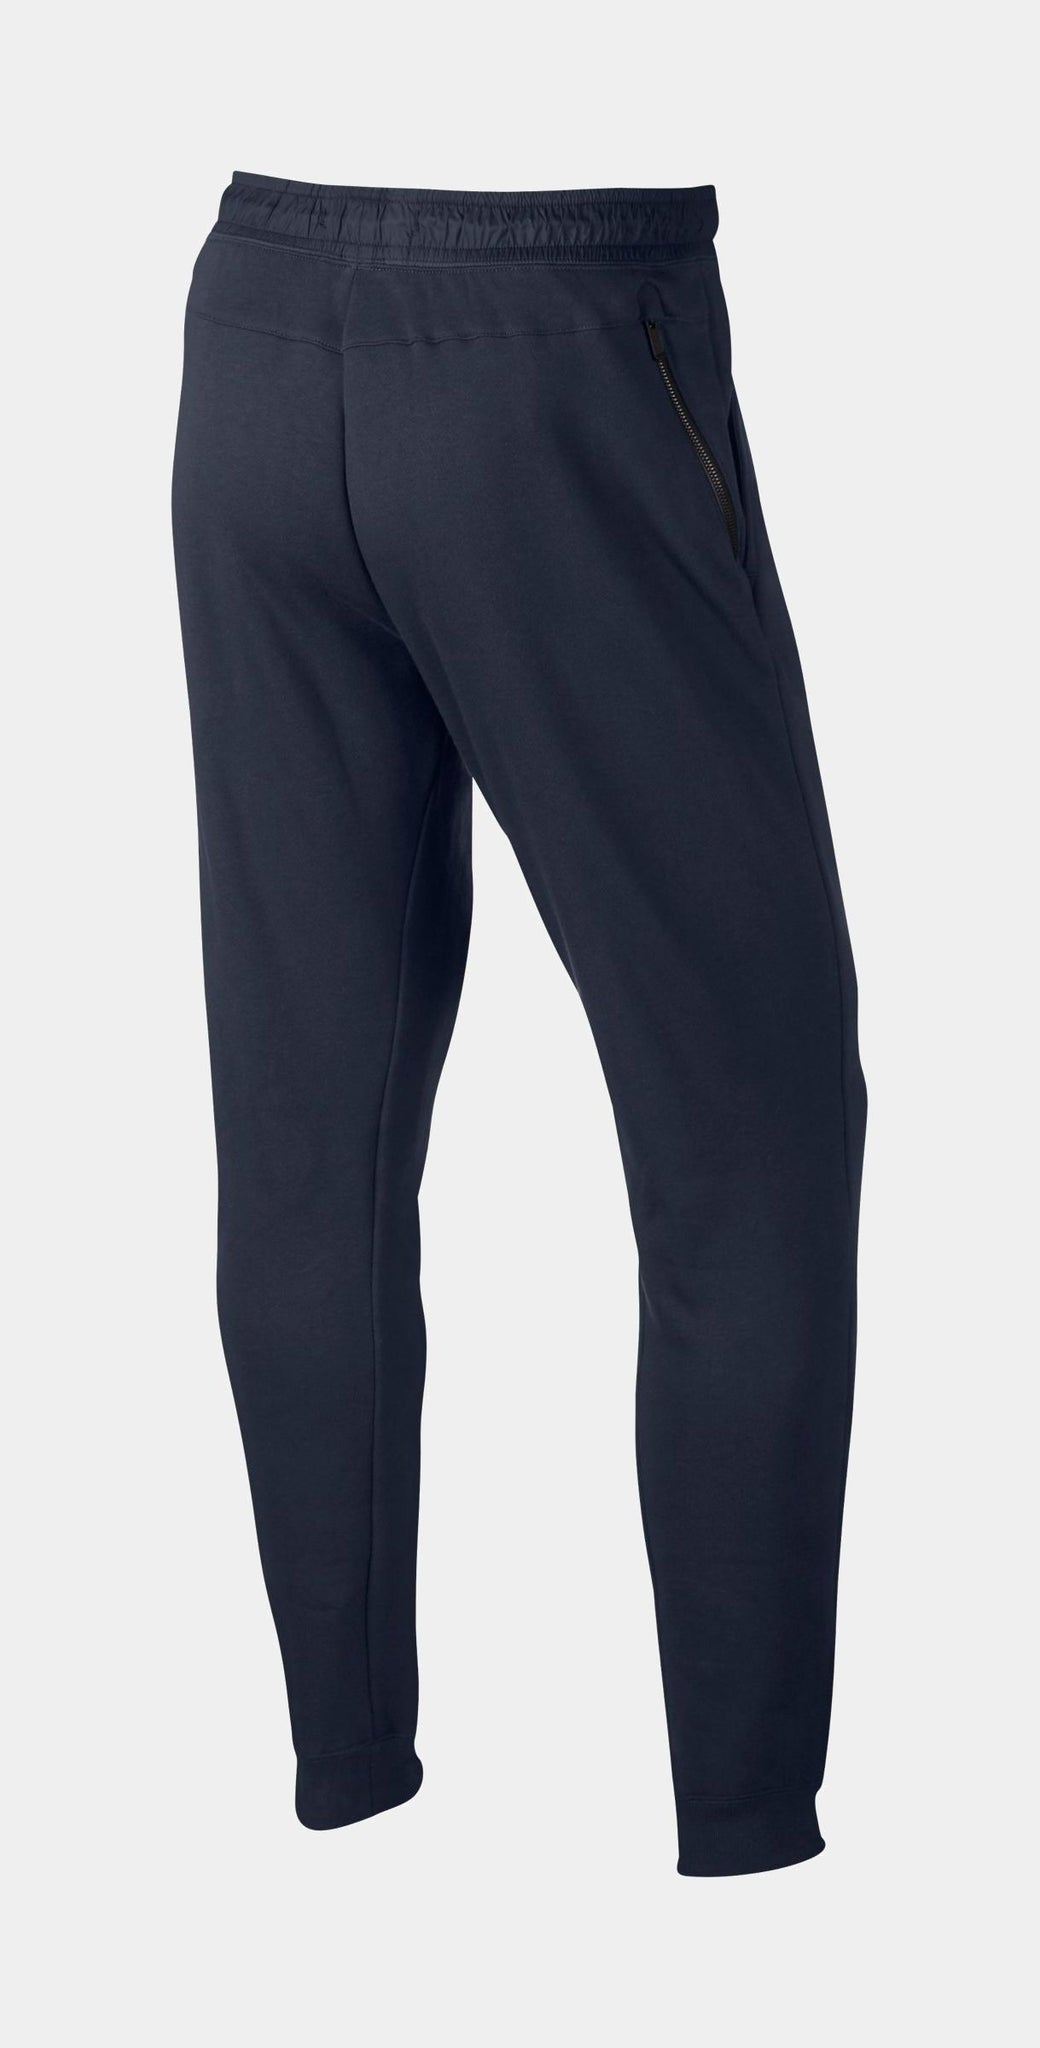 Nike Modern Joggers Mens Running Pants Obsidian Blue 835862-451